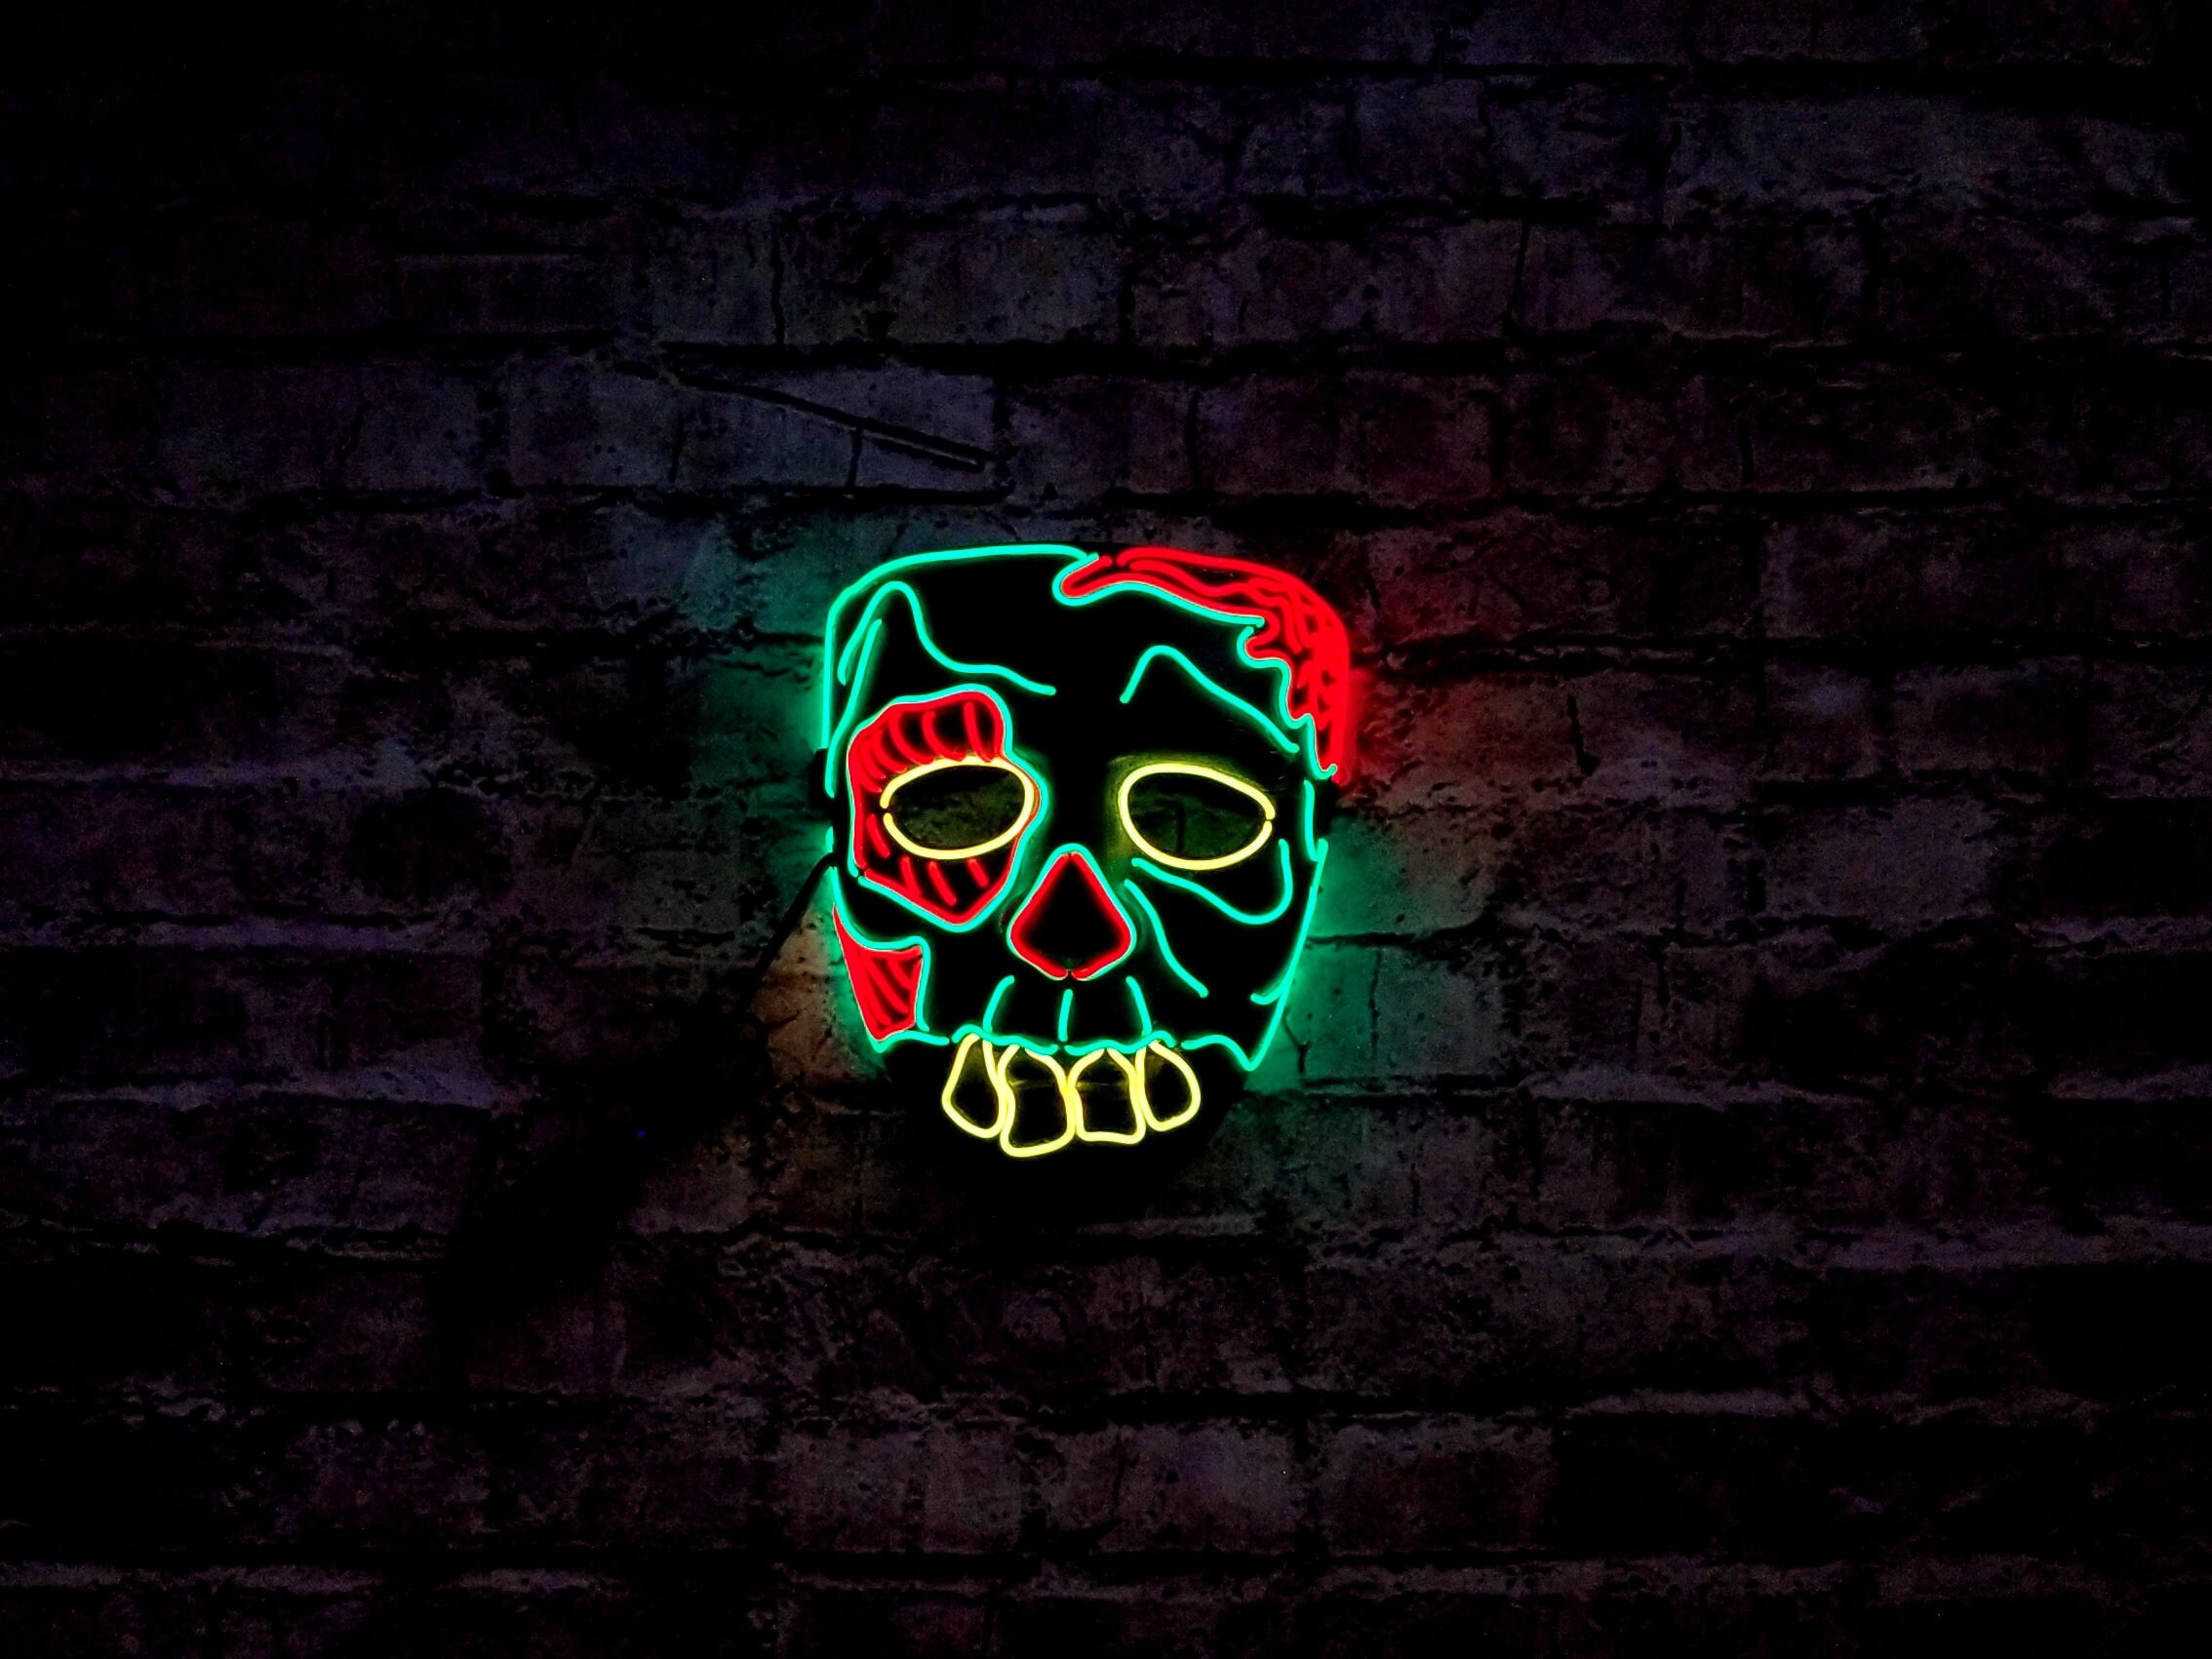 LED Glühend leuchtet EL Wire Horror Maske Purge Clownmaske Halloween Zombie